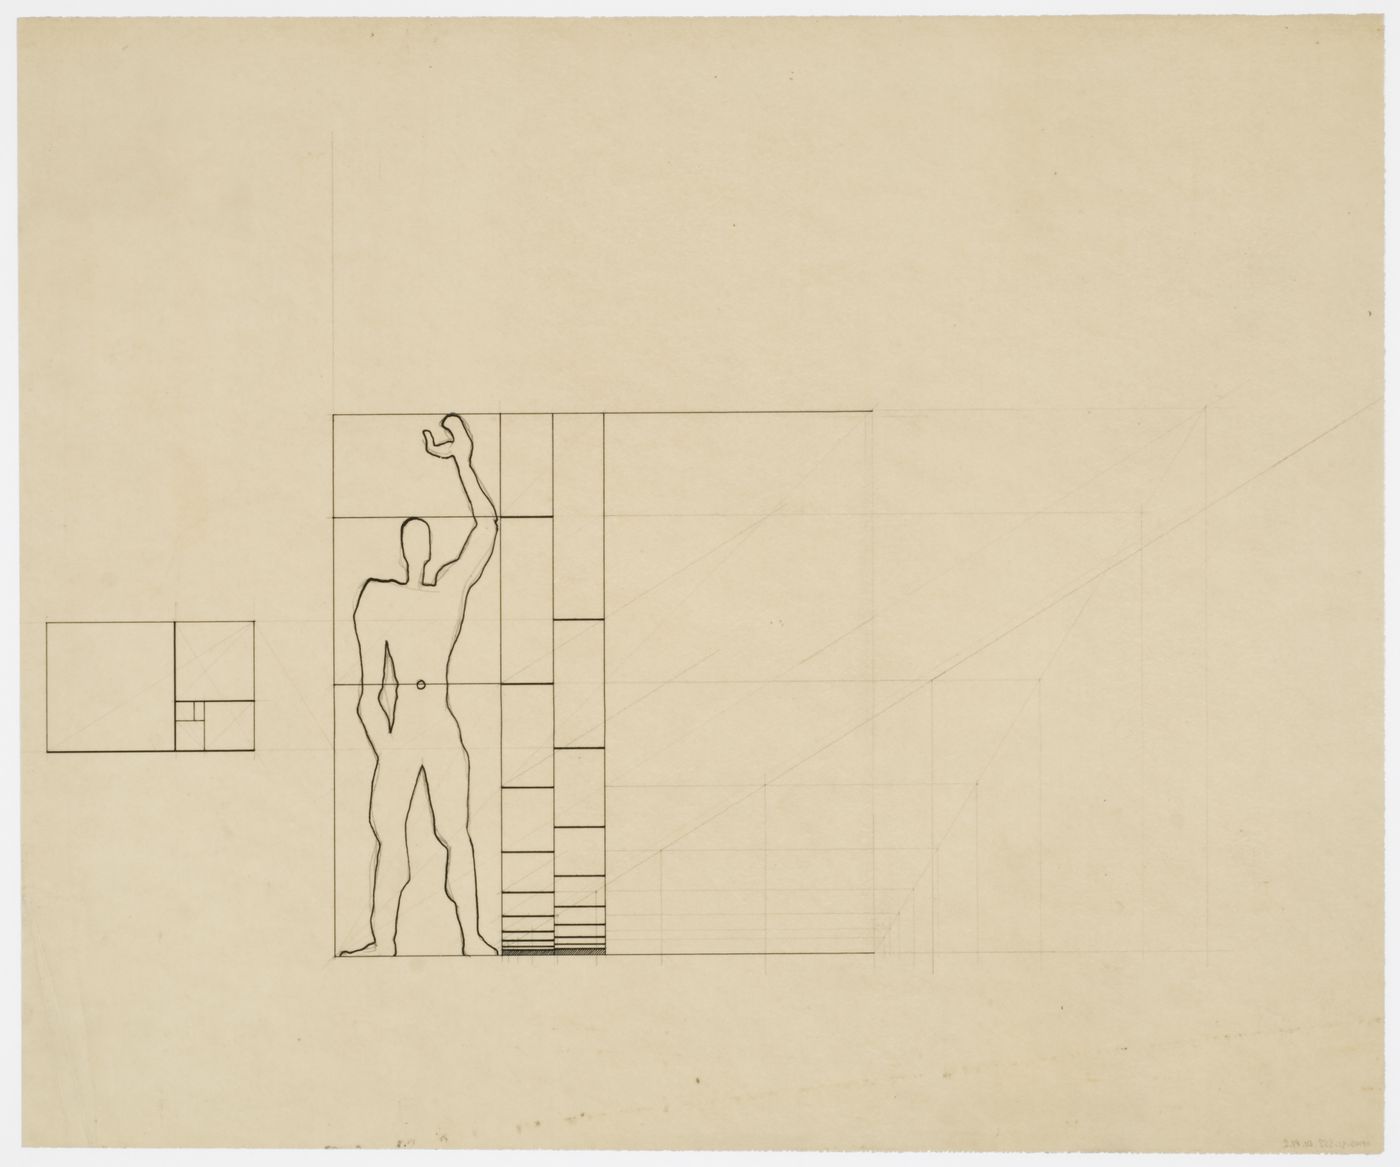 Diagram of Le Corbusier's "Modulor"